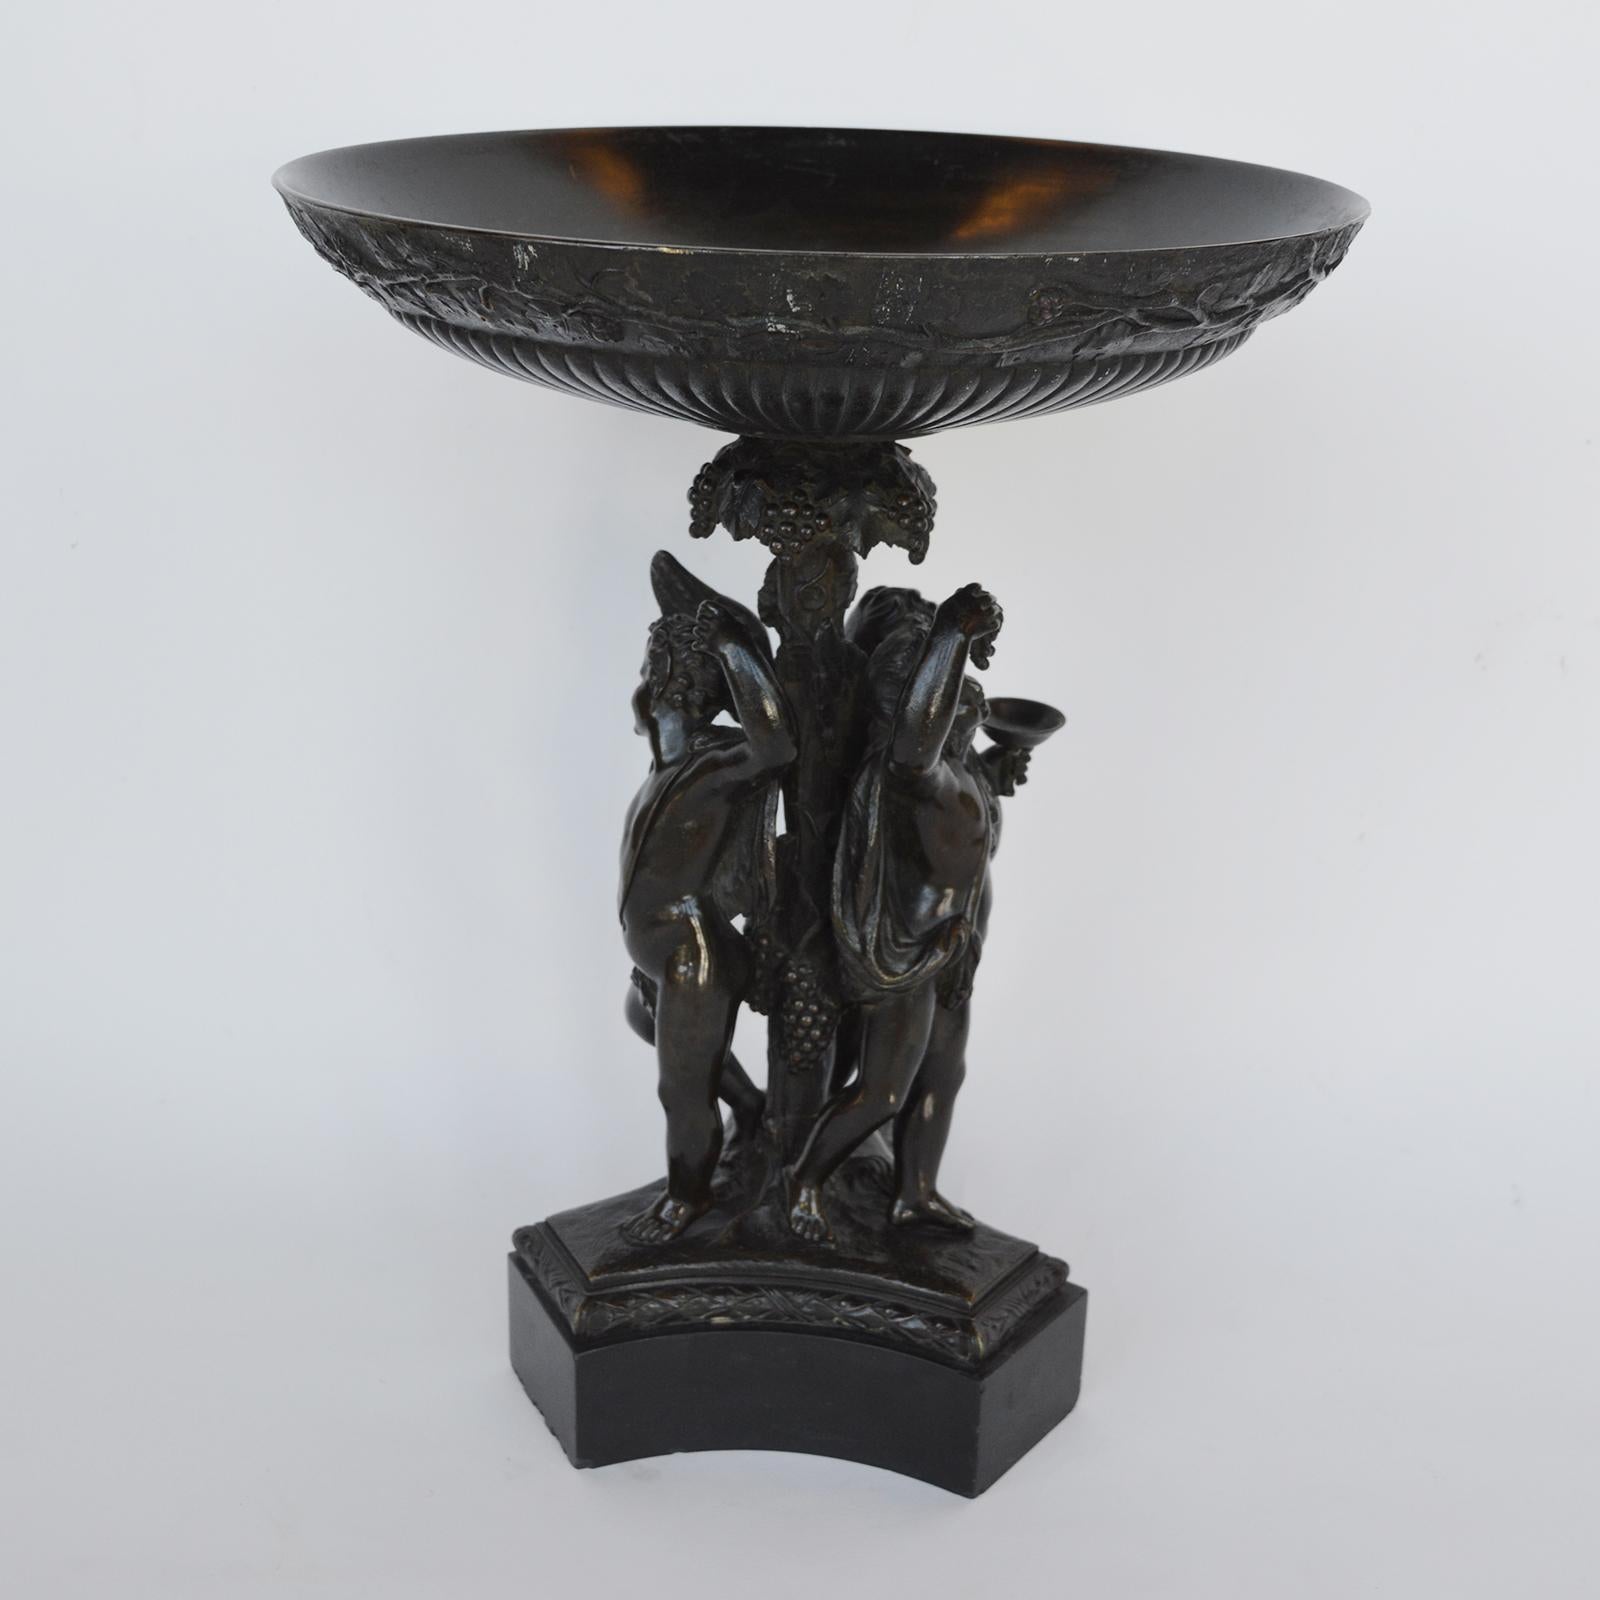 Italian bronze and black marble bacchanalian figural tazza, early 19th century.